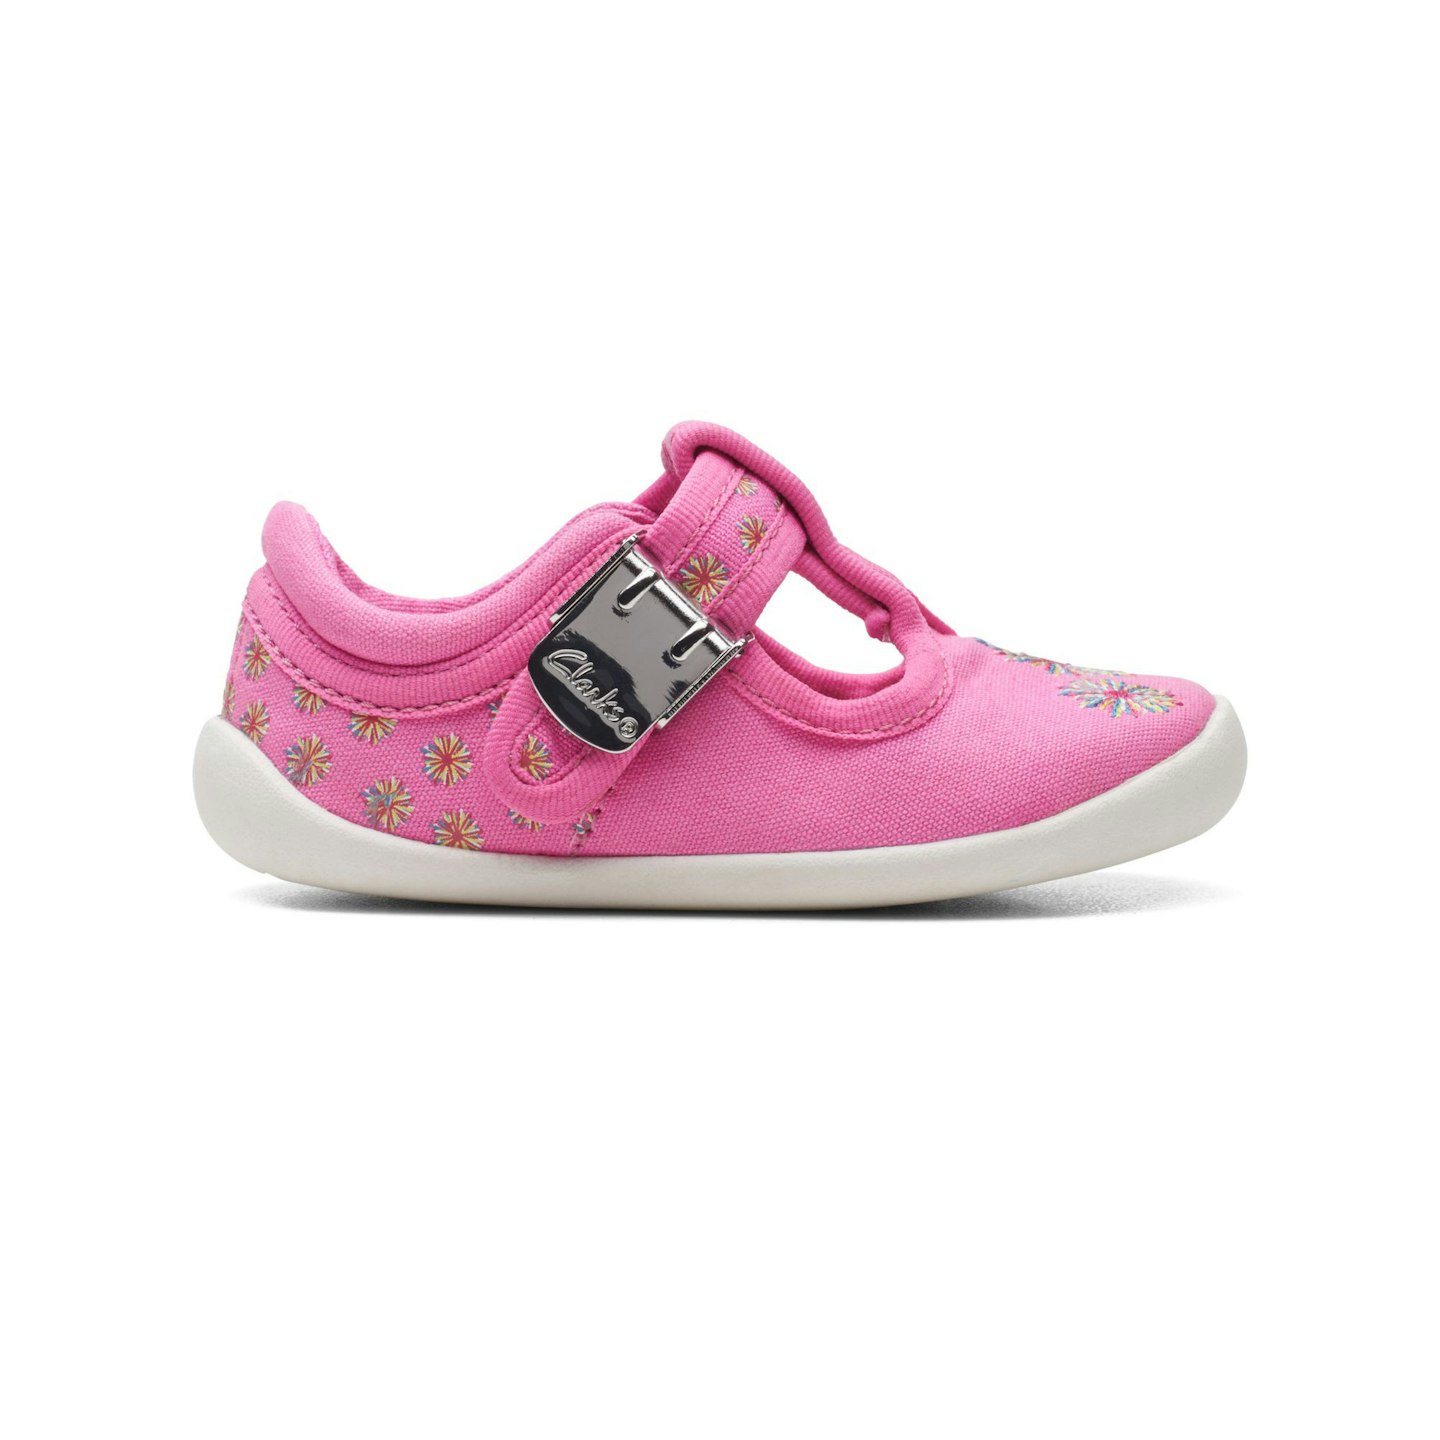 Roamer Sun Toddler Hot Pink baby's first shoes